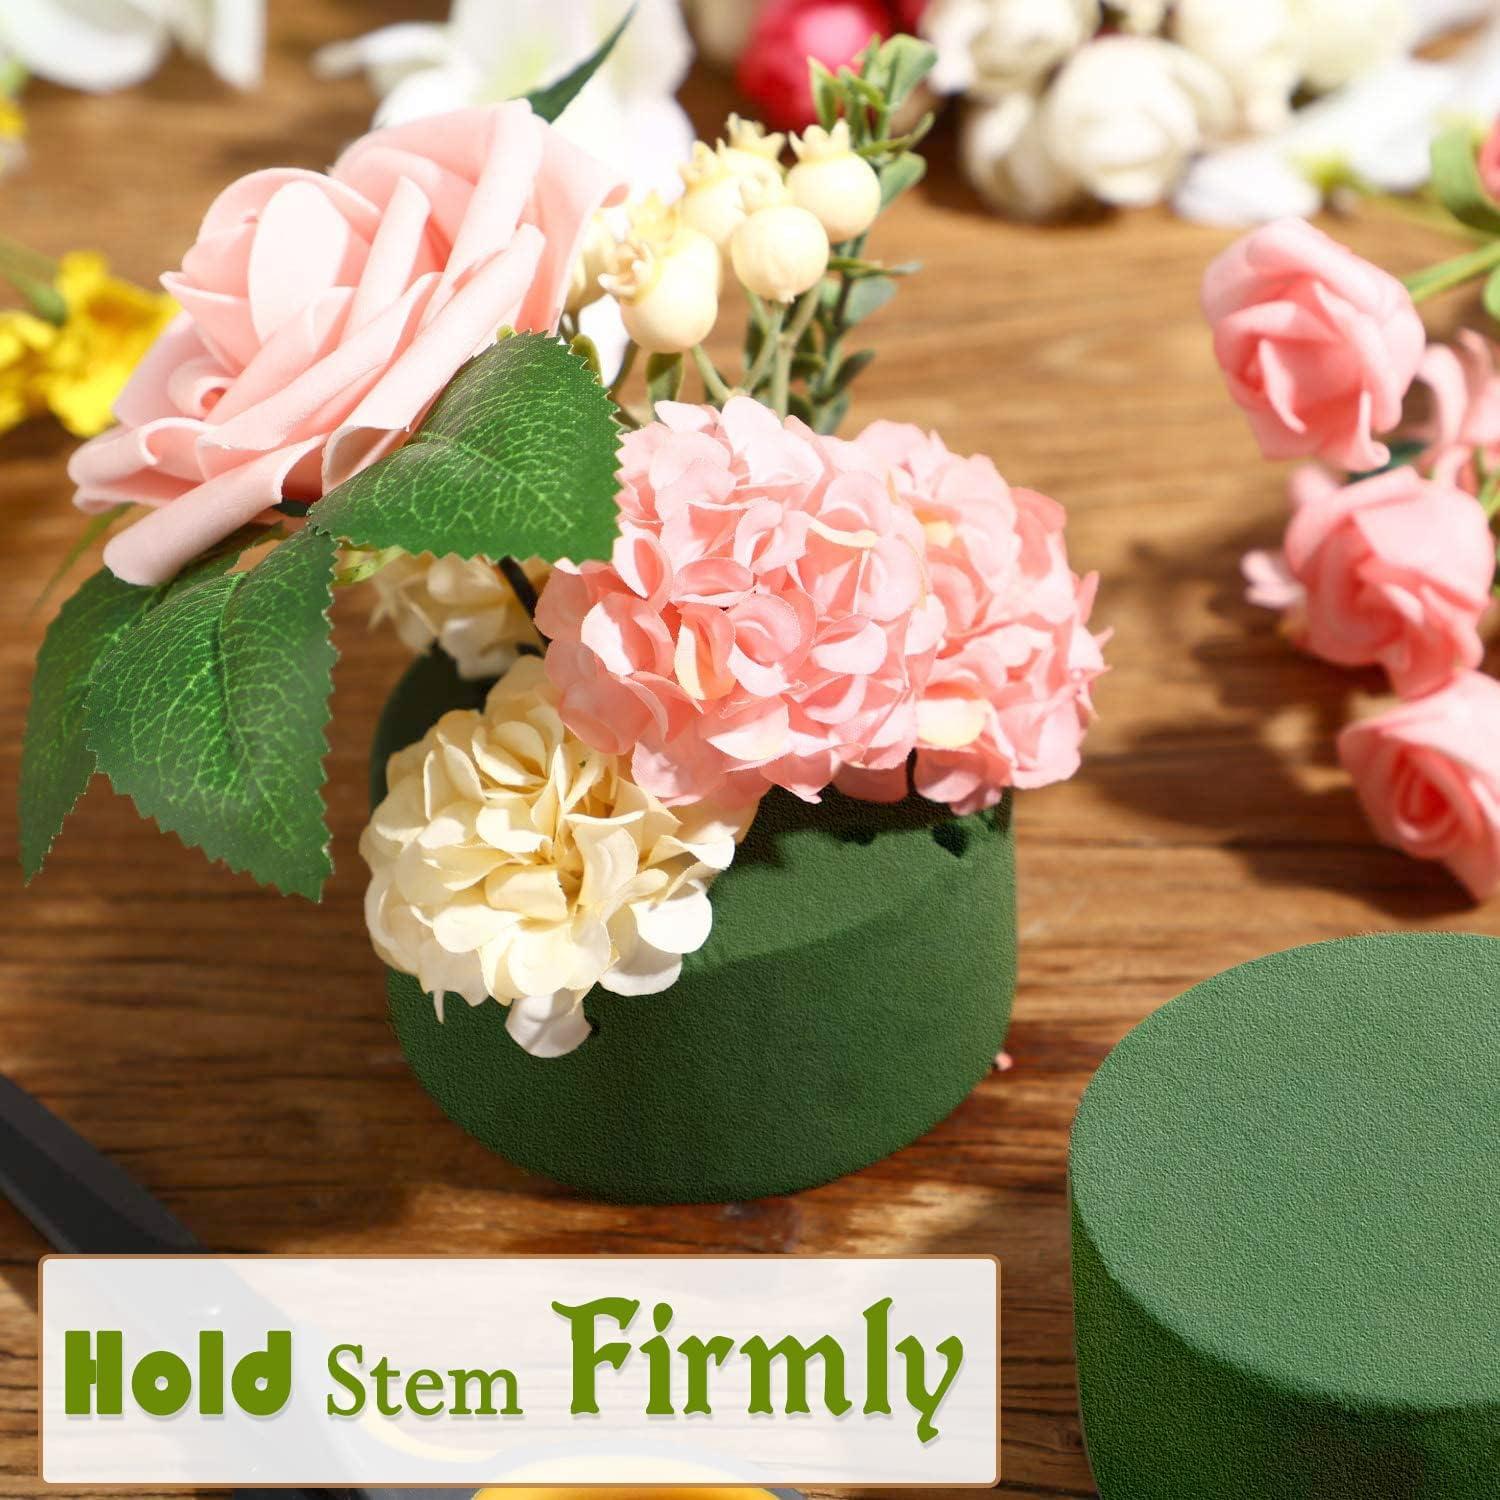 8 Premium DRY Florist Foam Bricks Floral Flower Display Arrangement UK 